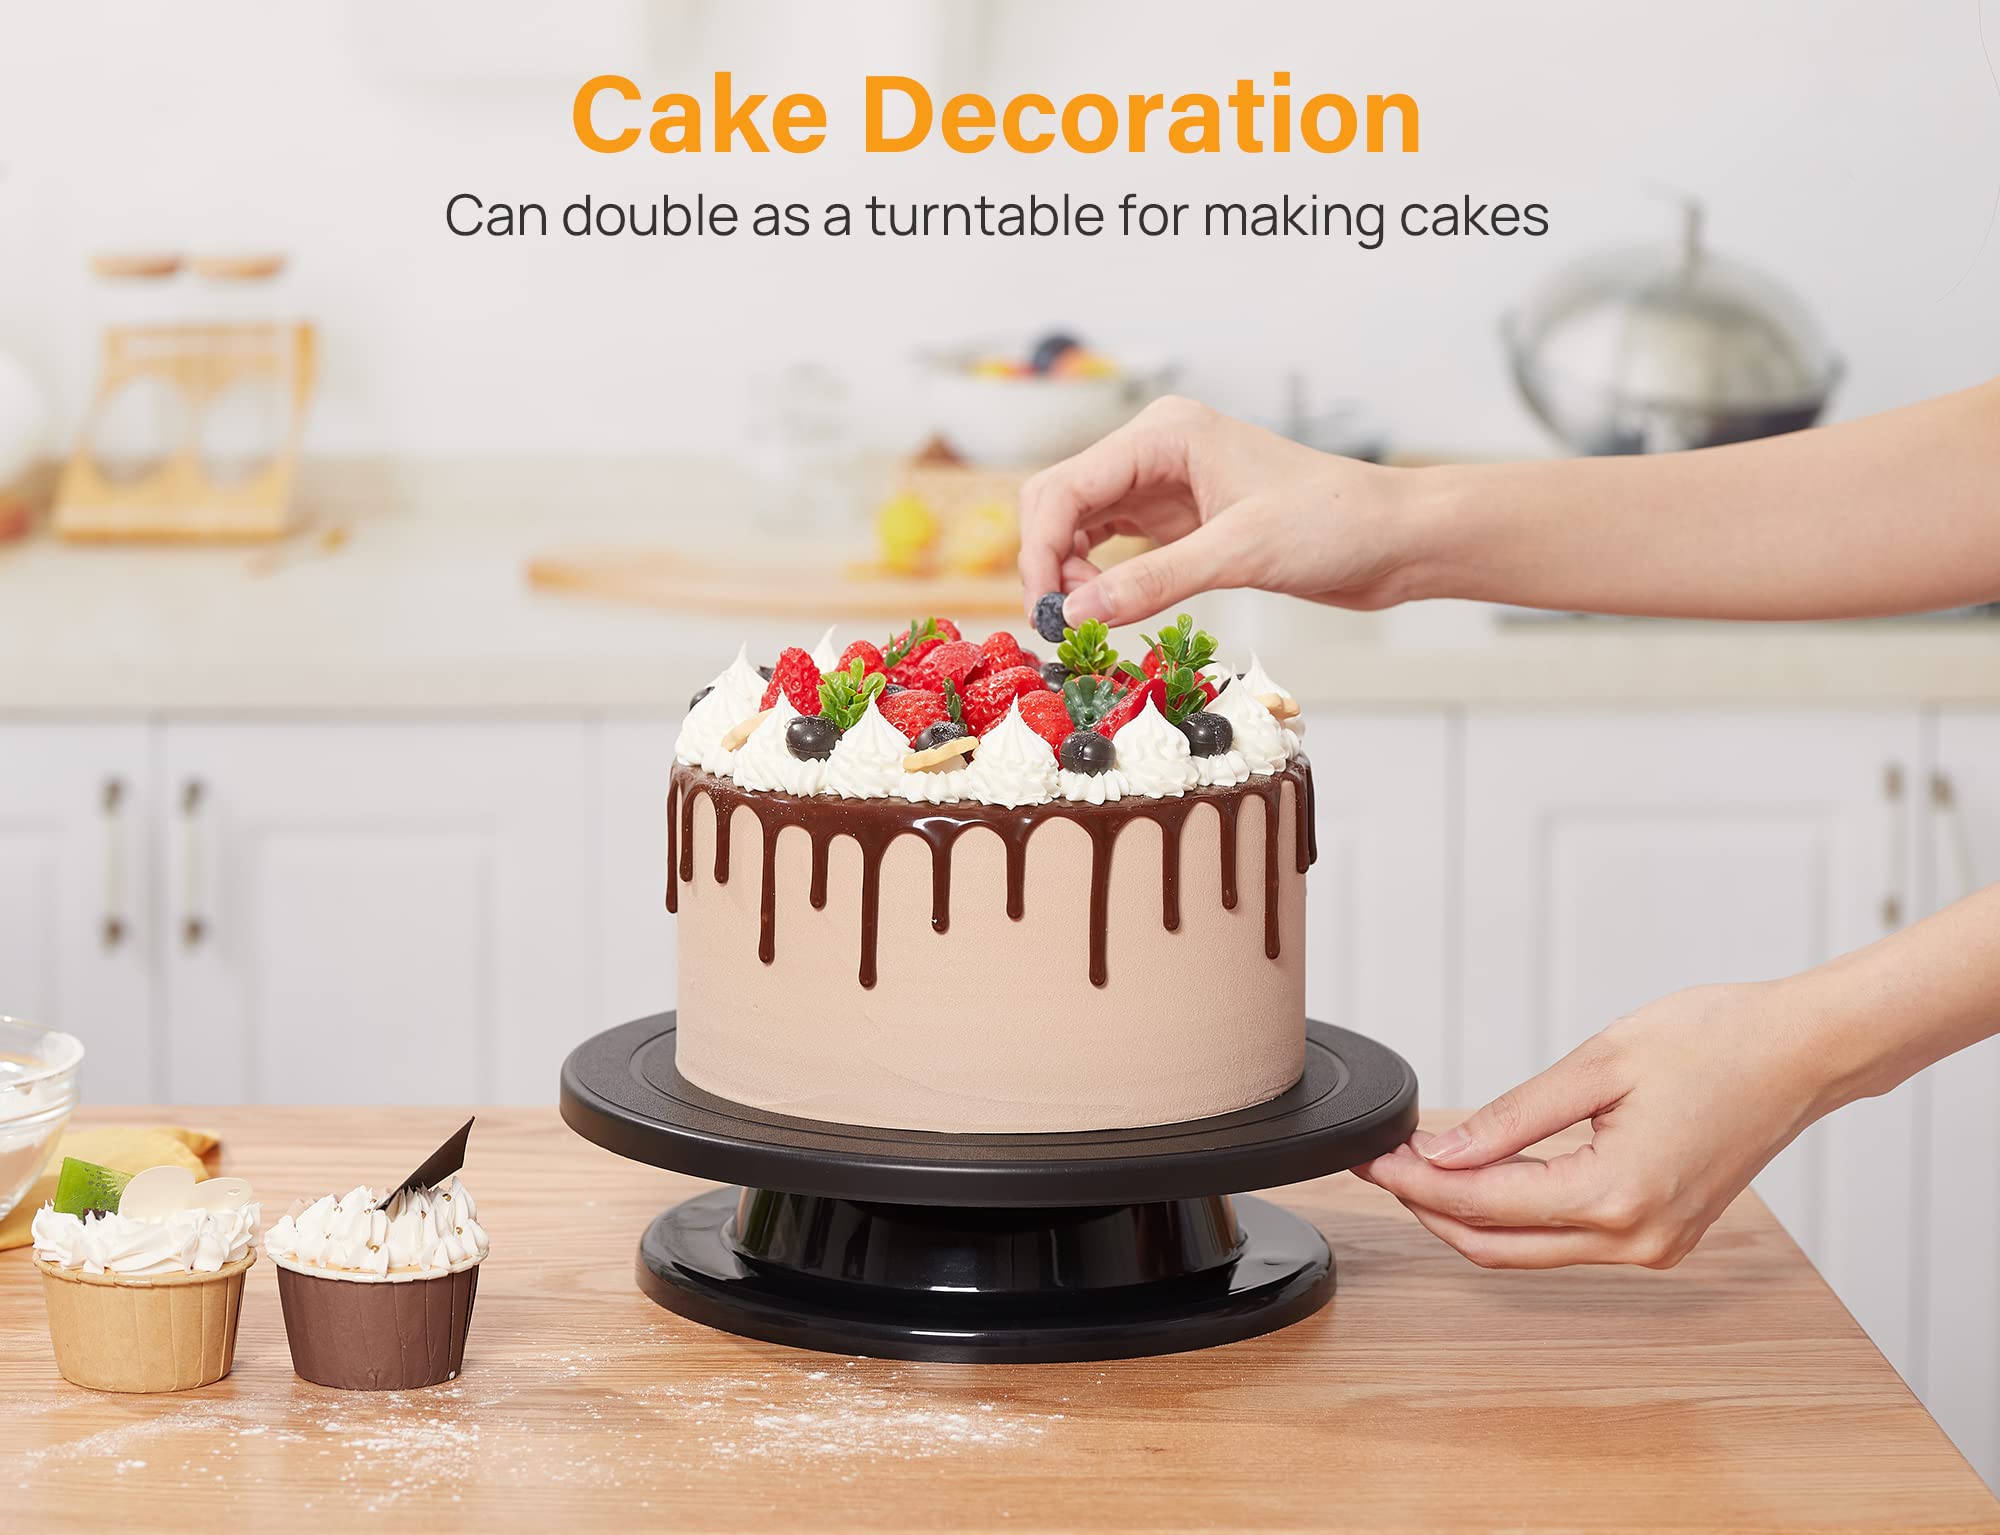 Kootek Rotate Turntable Revolving Black Turn Table Lightweight Cake Stand for Paint Spraying, Cake Decorating, Displaying Item